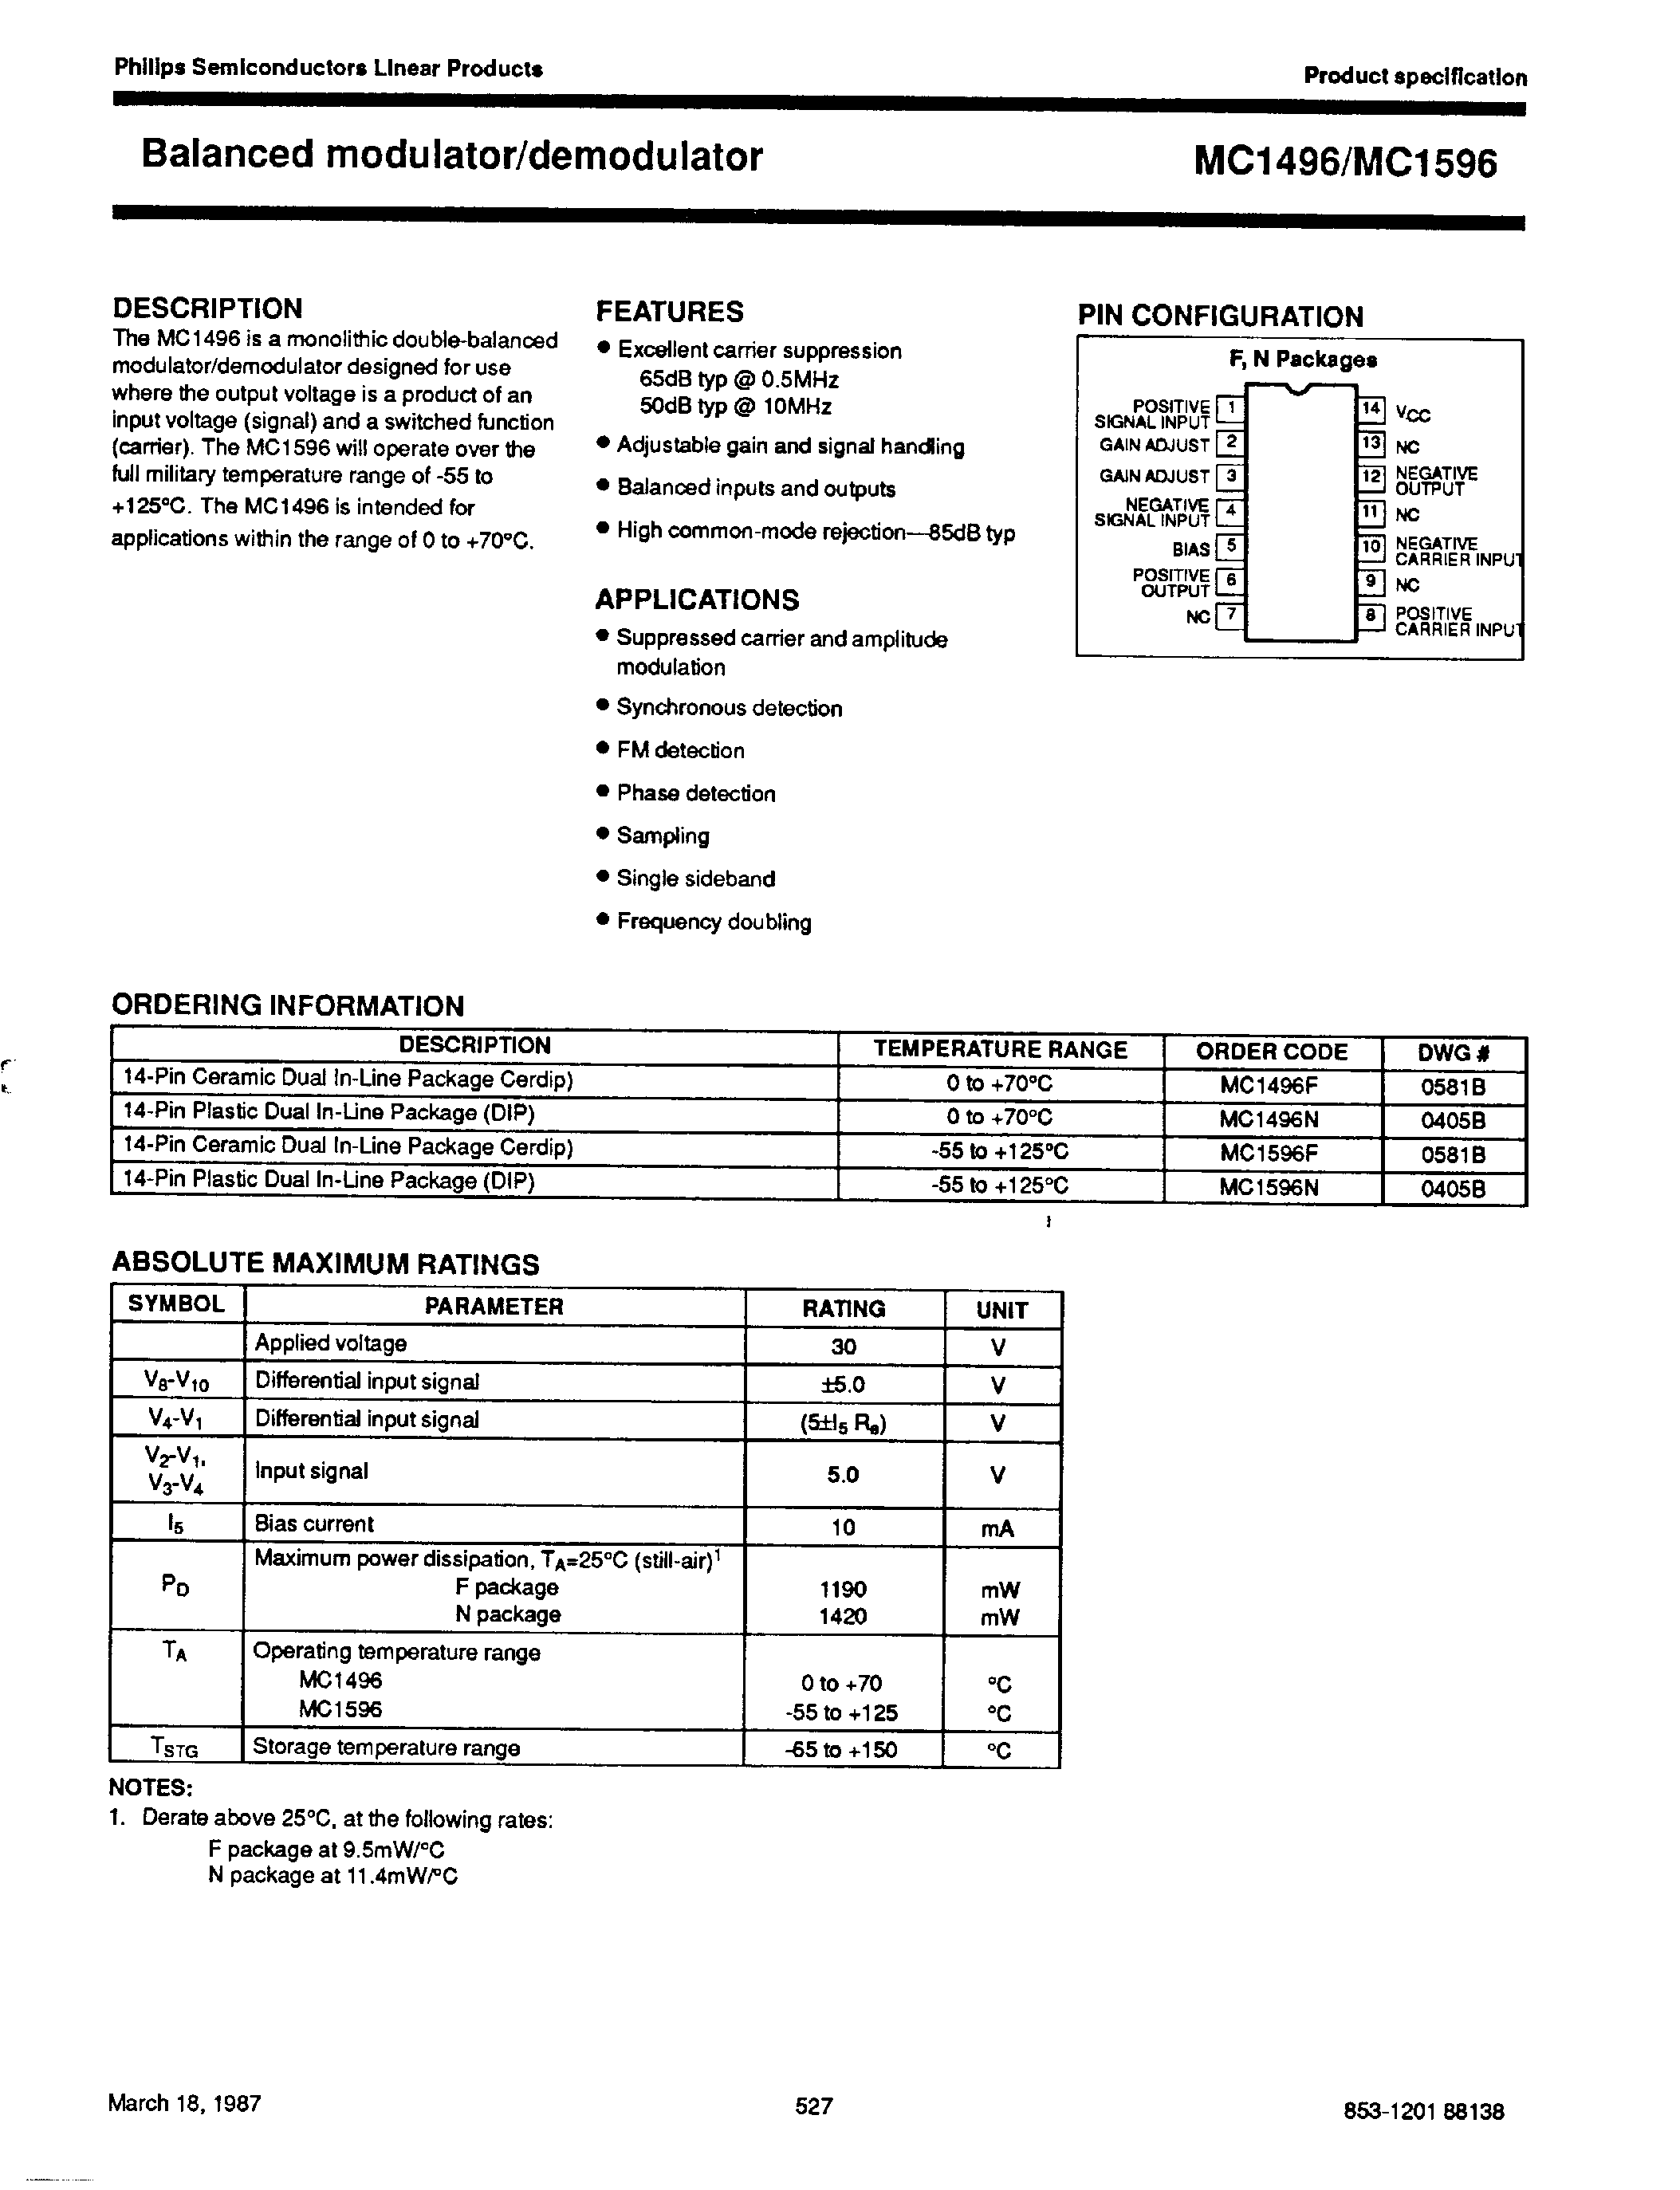 Datasheet MC1496 - (MC1496 / MC1596) Balanced mudulator/demodulator page 1